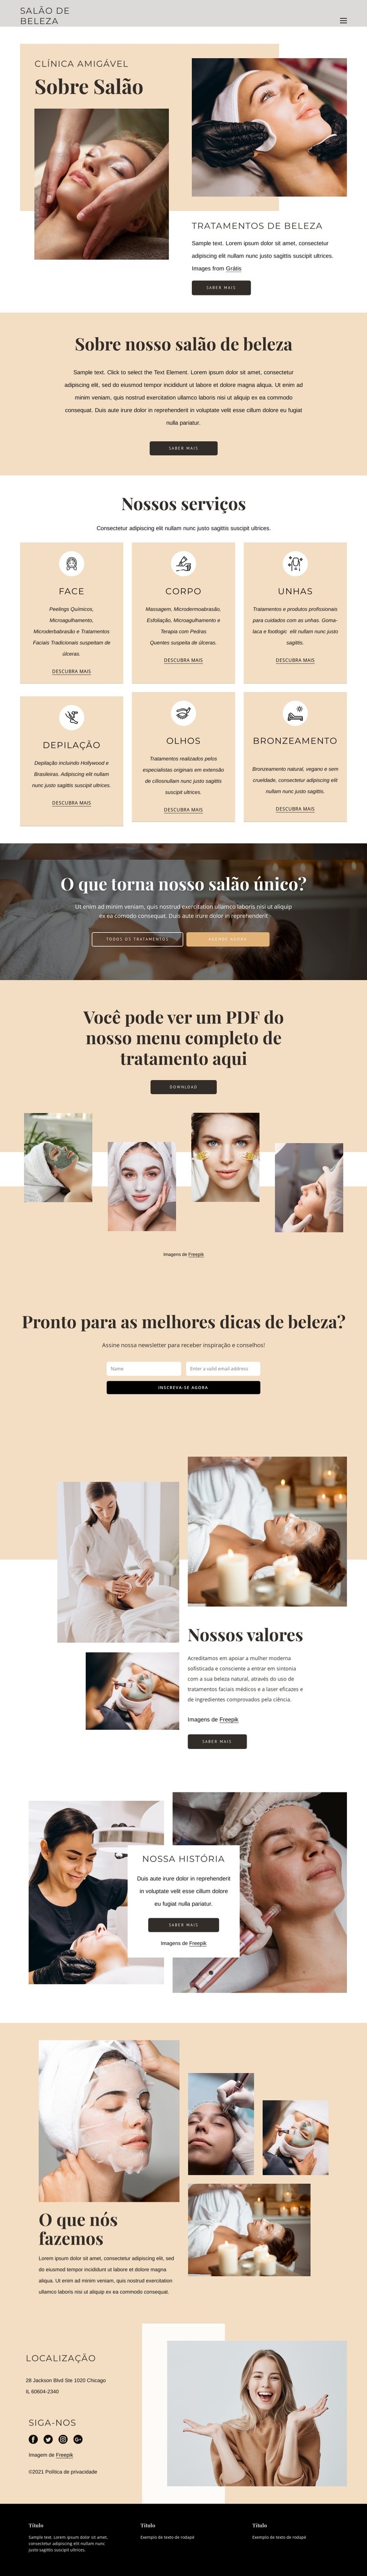 Tratamentos de beleza e estética Maquete do site